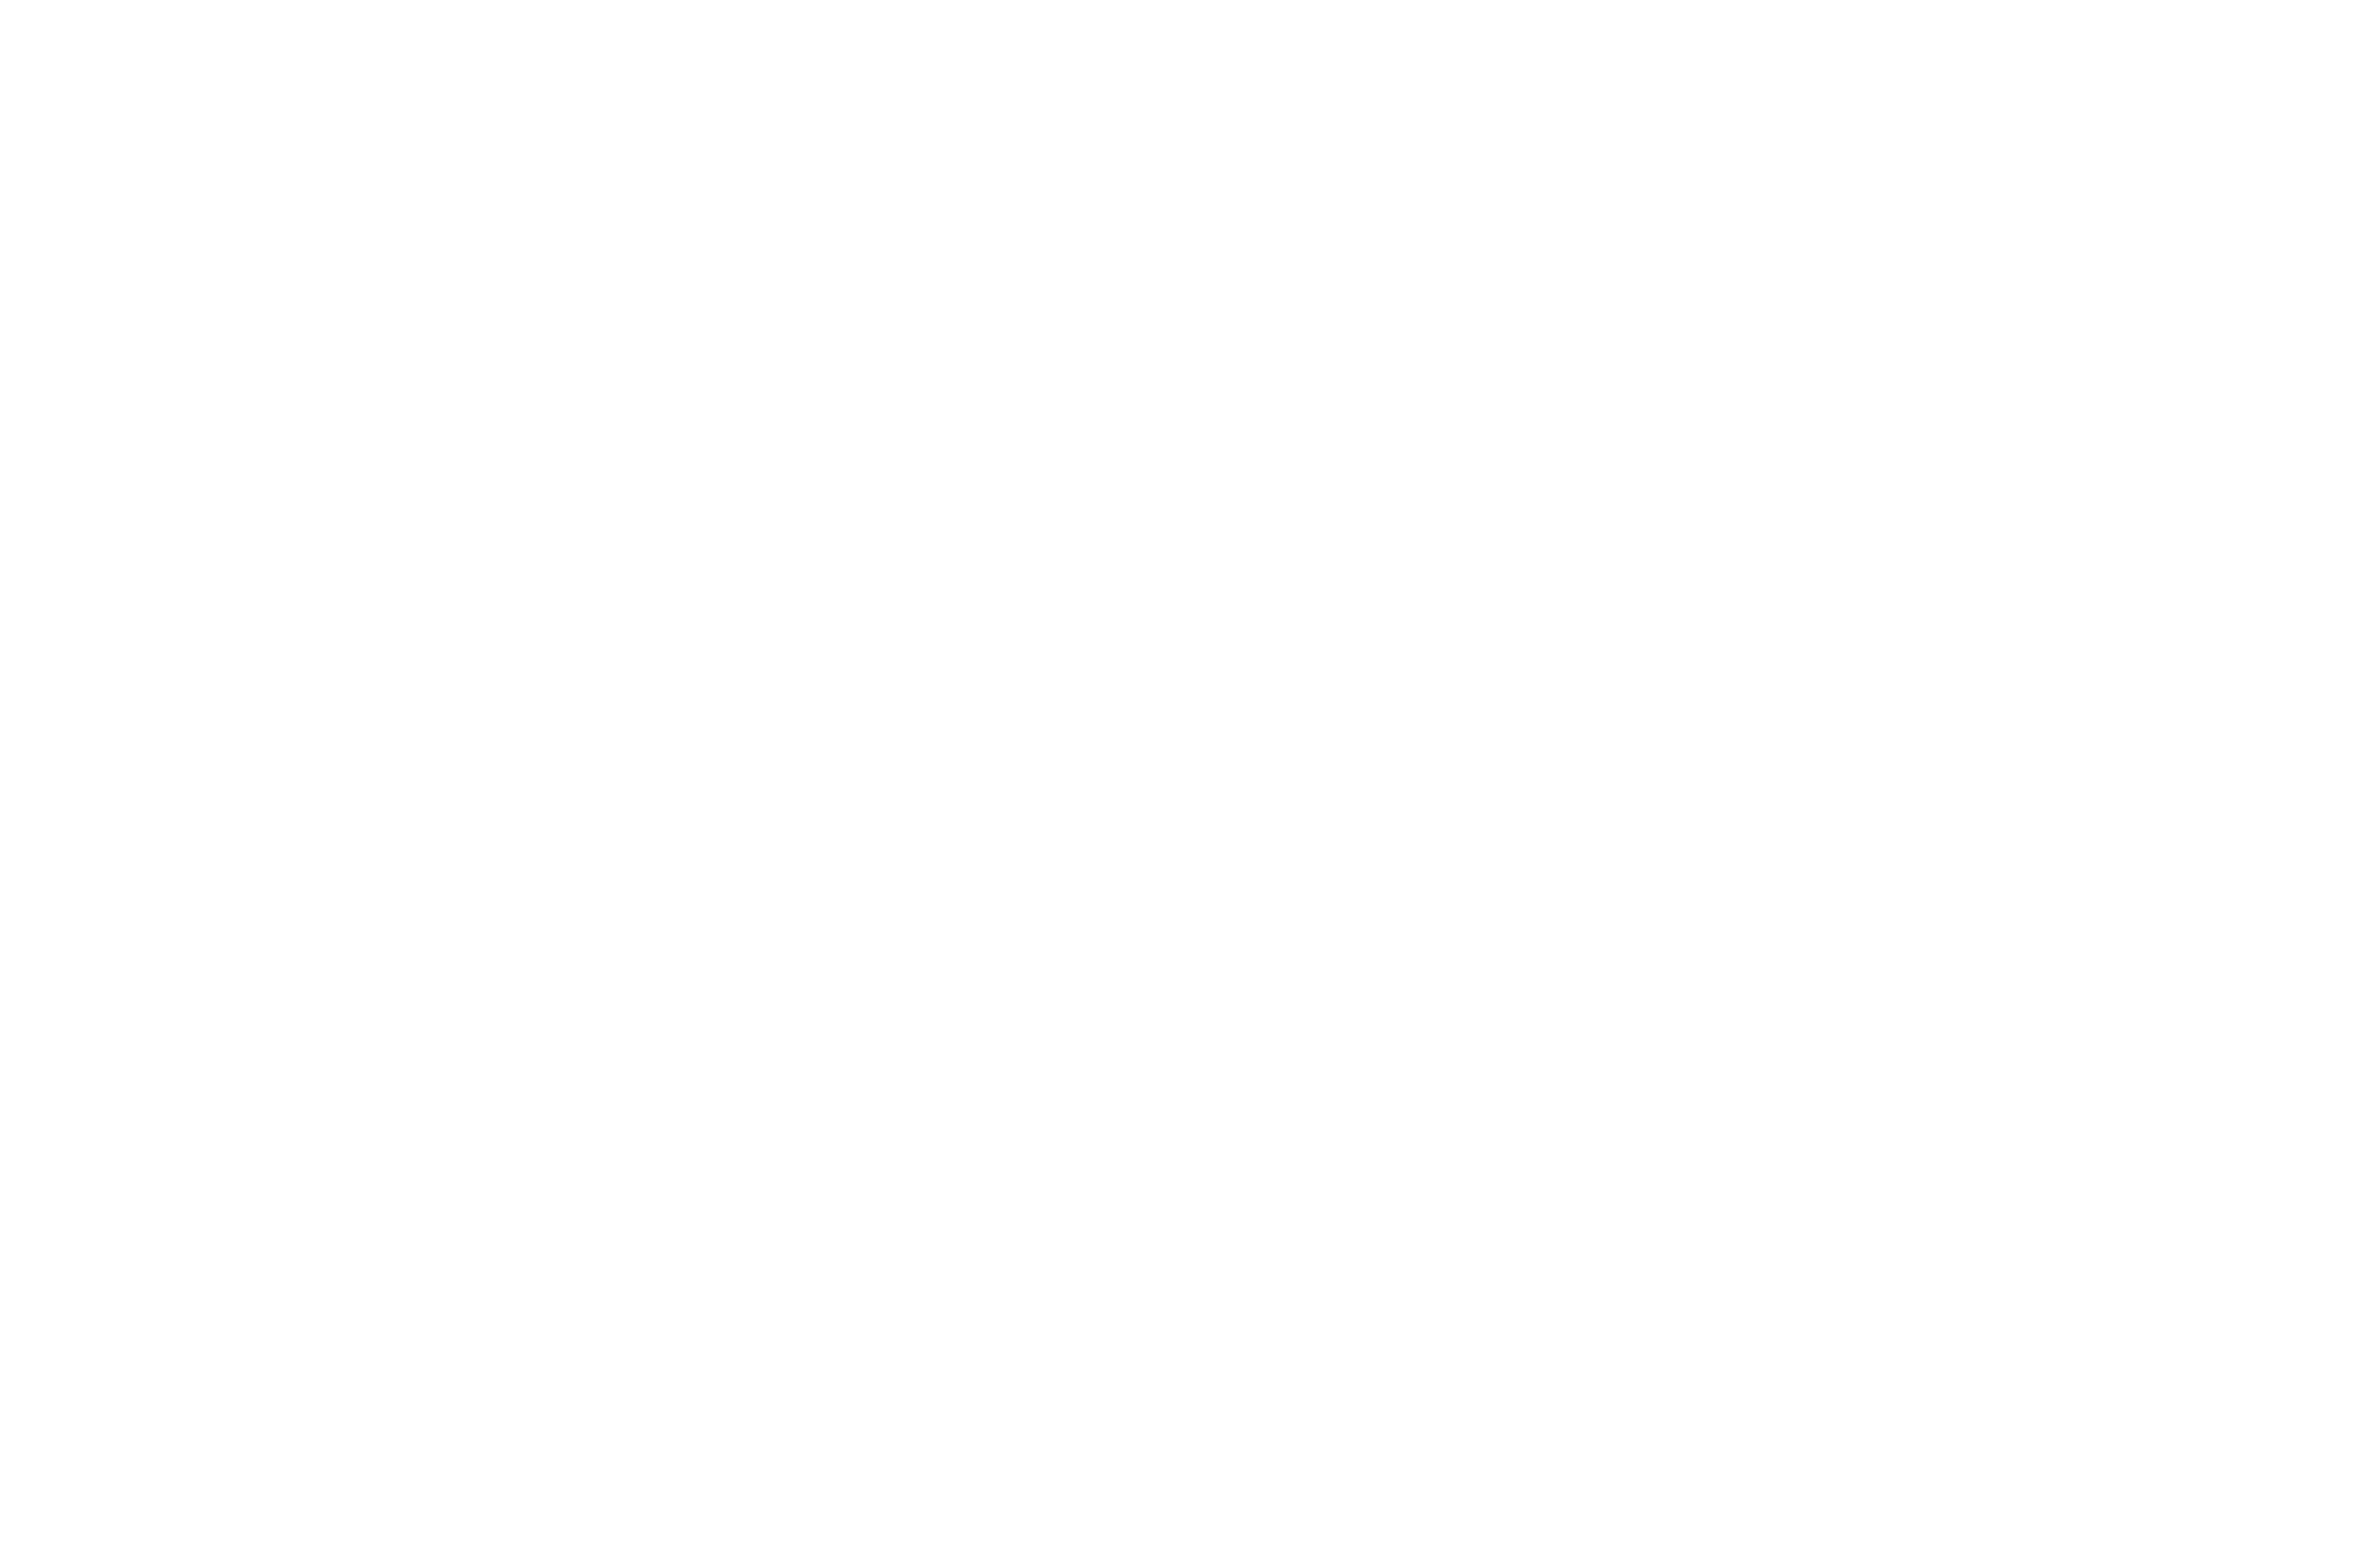 2021 Tripvill International Film Festival-JANUARY2021 WINNER